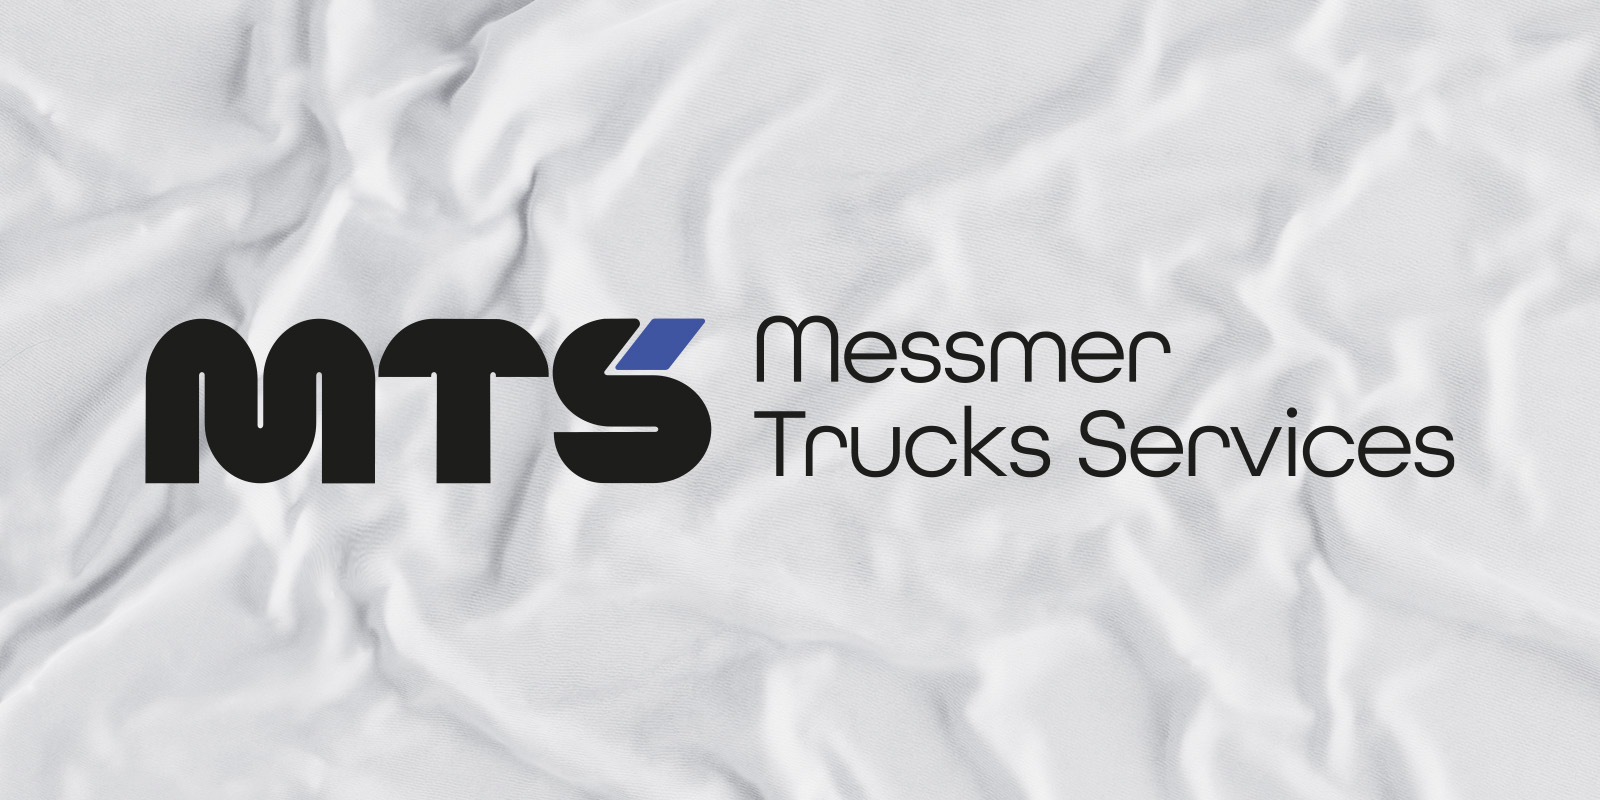 Logo - Messmer Trucks Services